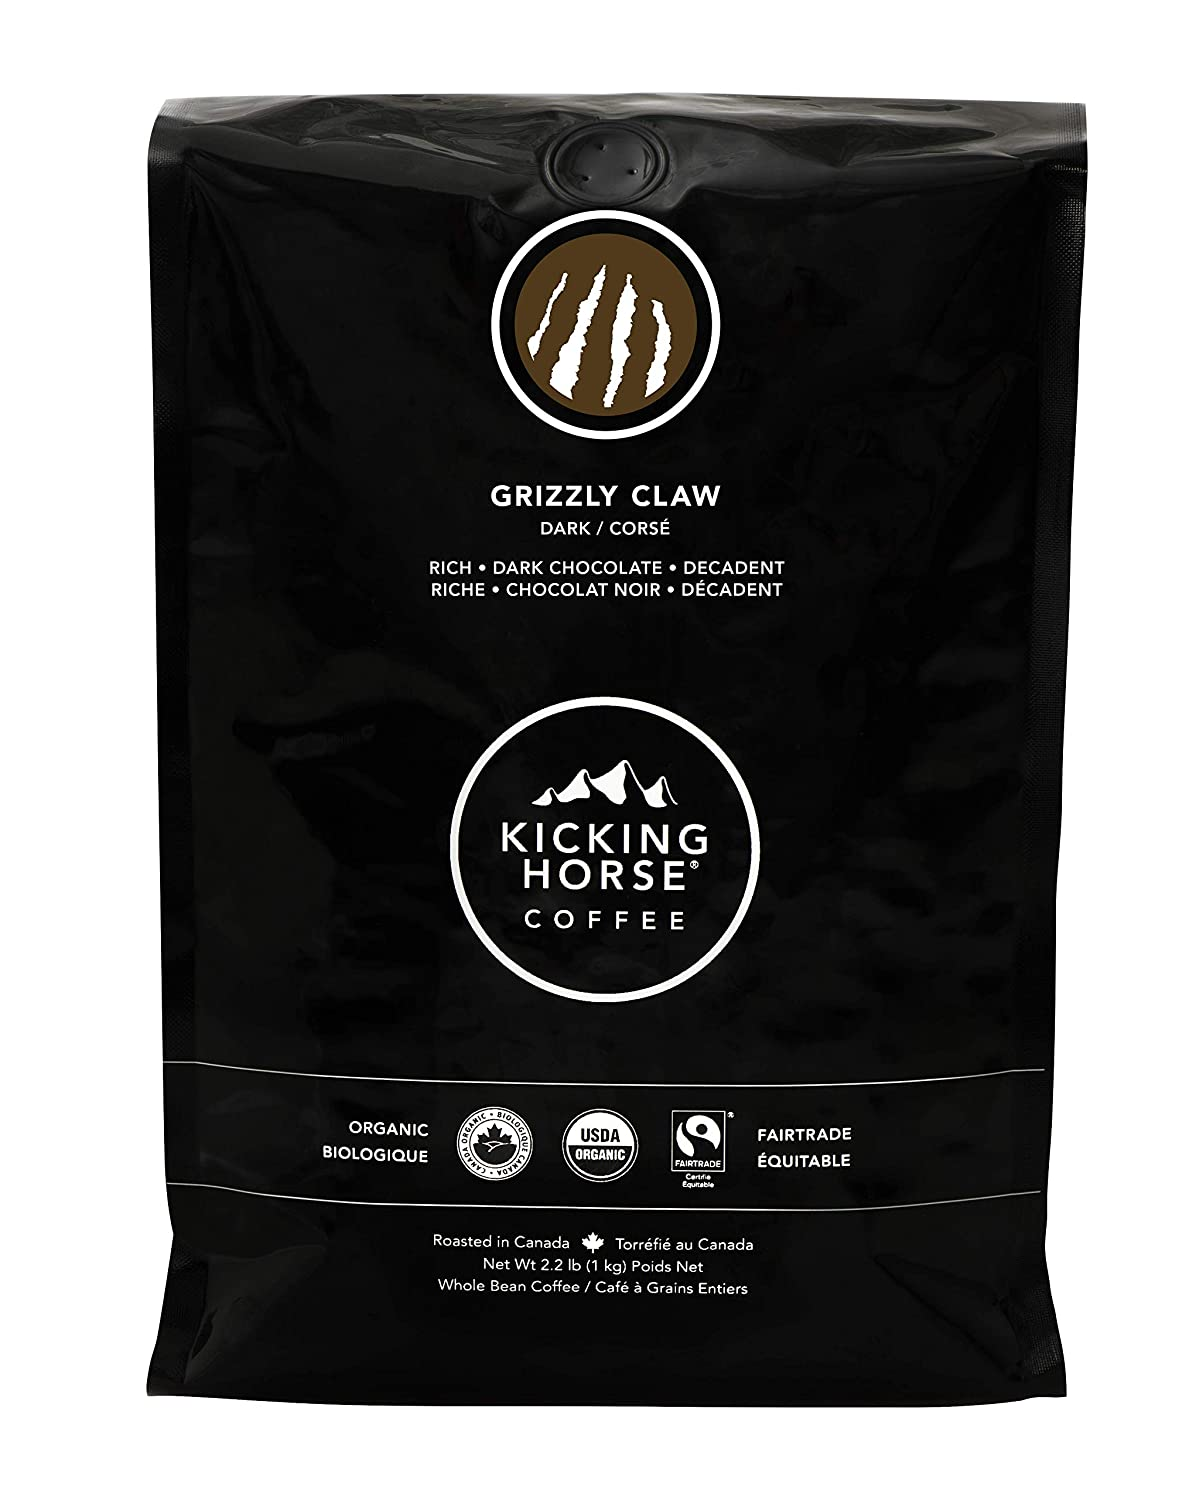 Amazon.com : Kicking Horse Coffee, Grizzly Claw, Dark Roast, Whole Bean, 2.2 Pound - Certified Organic, Fairtrade, Kosher Coffee : Grocery & Gourmet Food $17.54